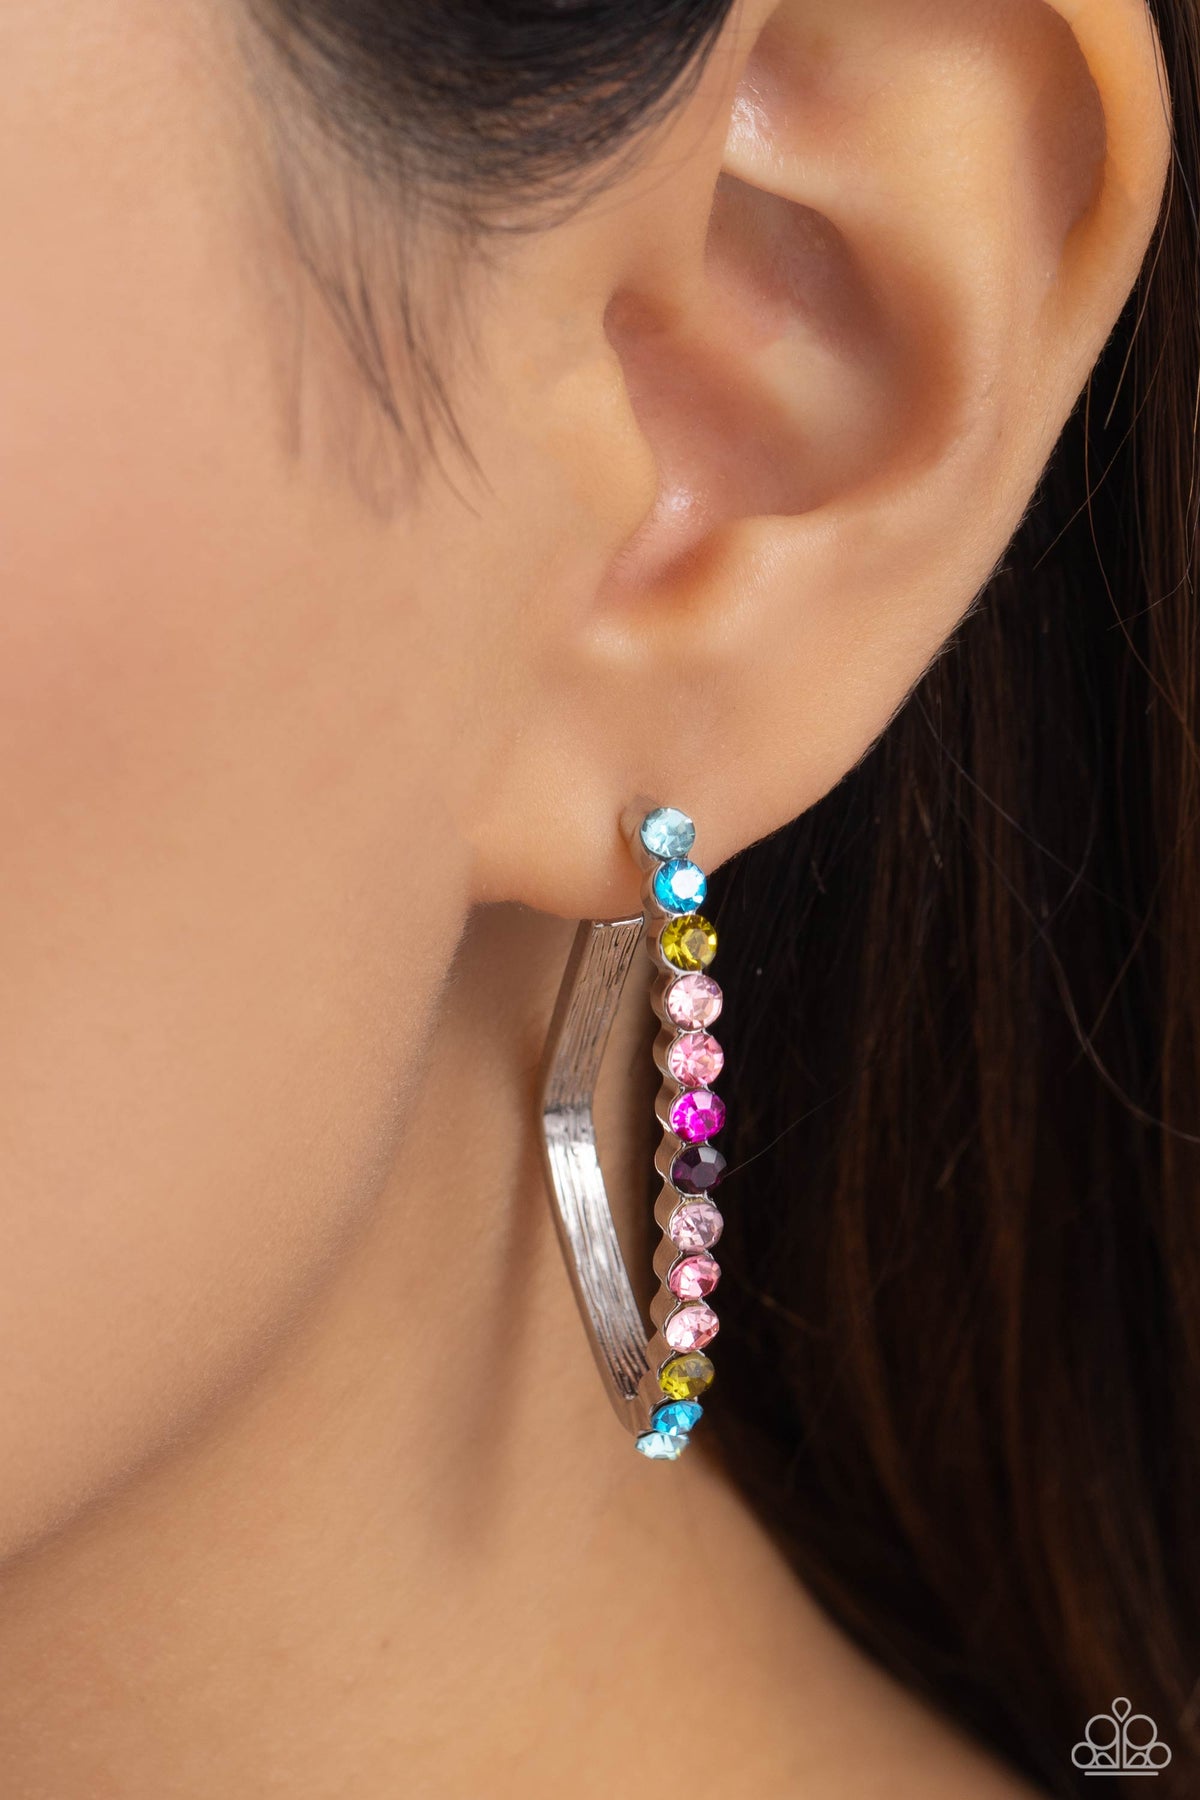 Triangular Tapestry Multi Rhinestone Hoop Earrings - Paparazzi Accessories-on model - CarasShop.com - $5 Jewelry by Cara Jewels